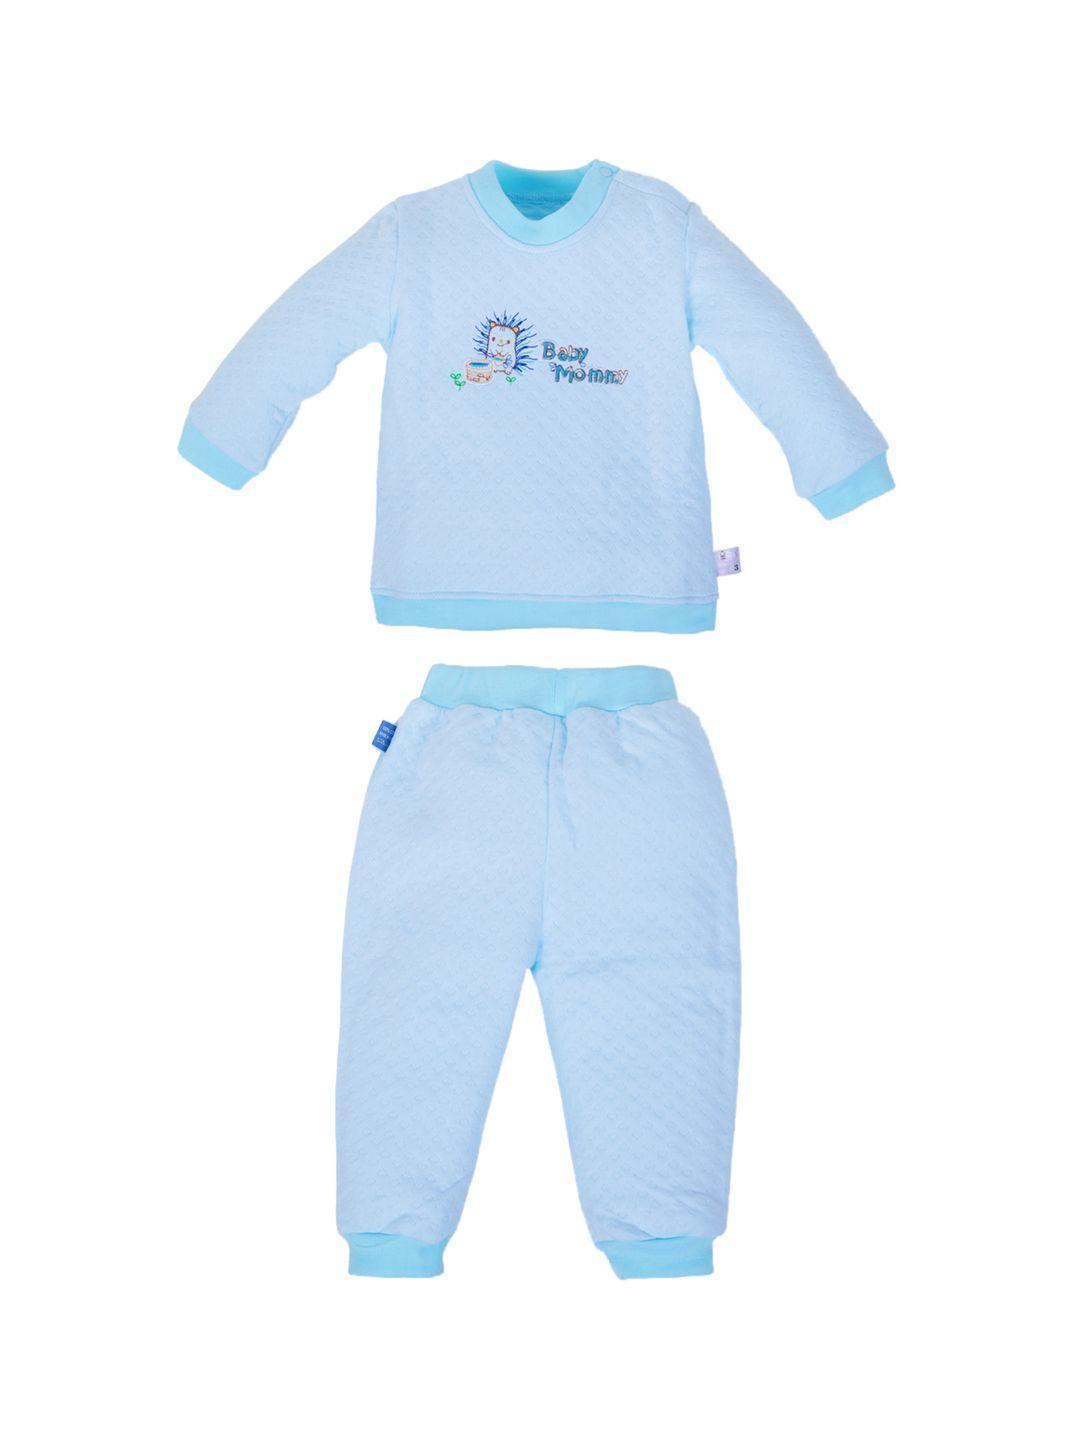 pokory unisex kids blue printed pure cotton night suit